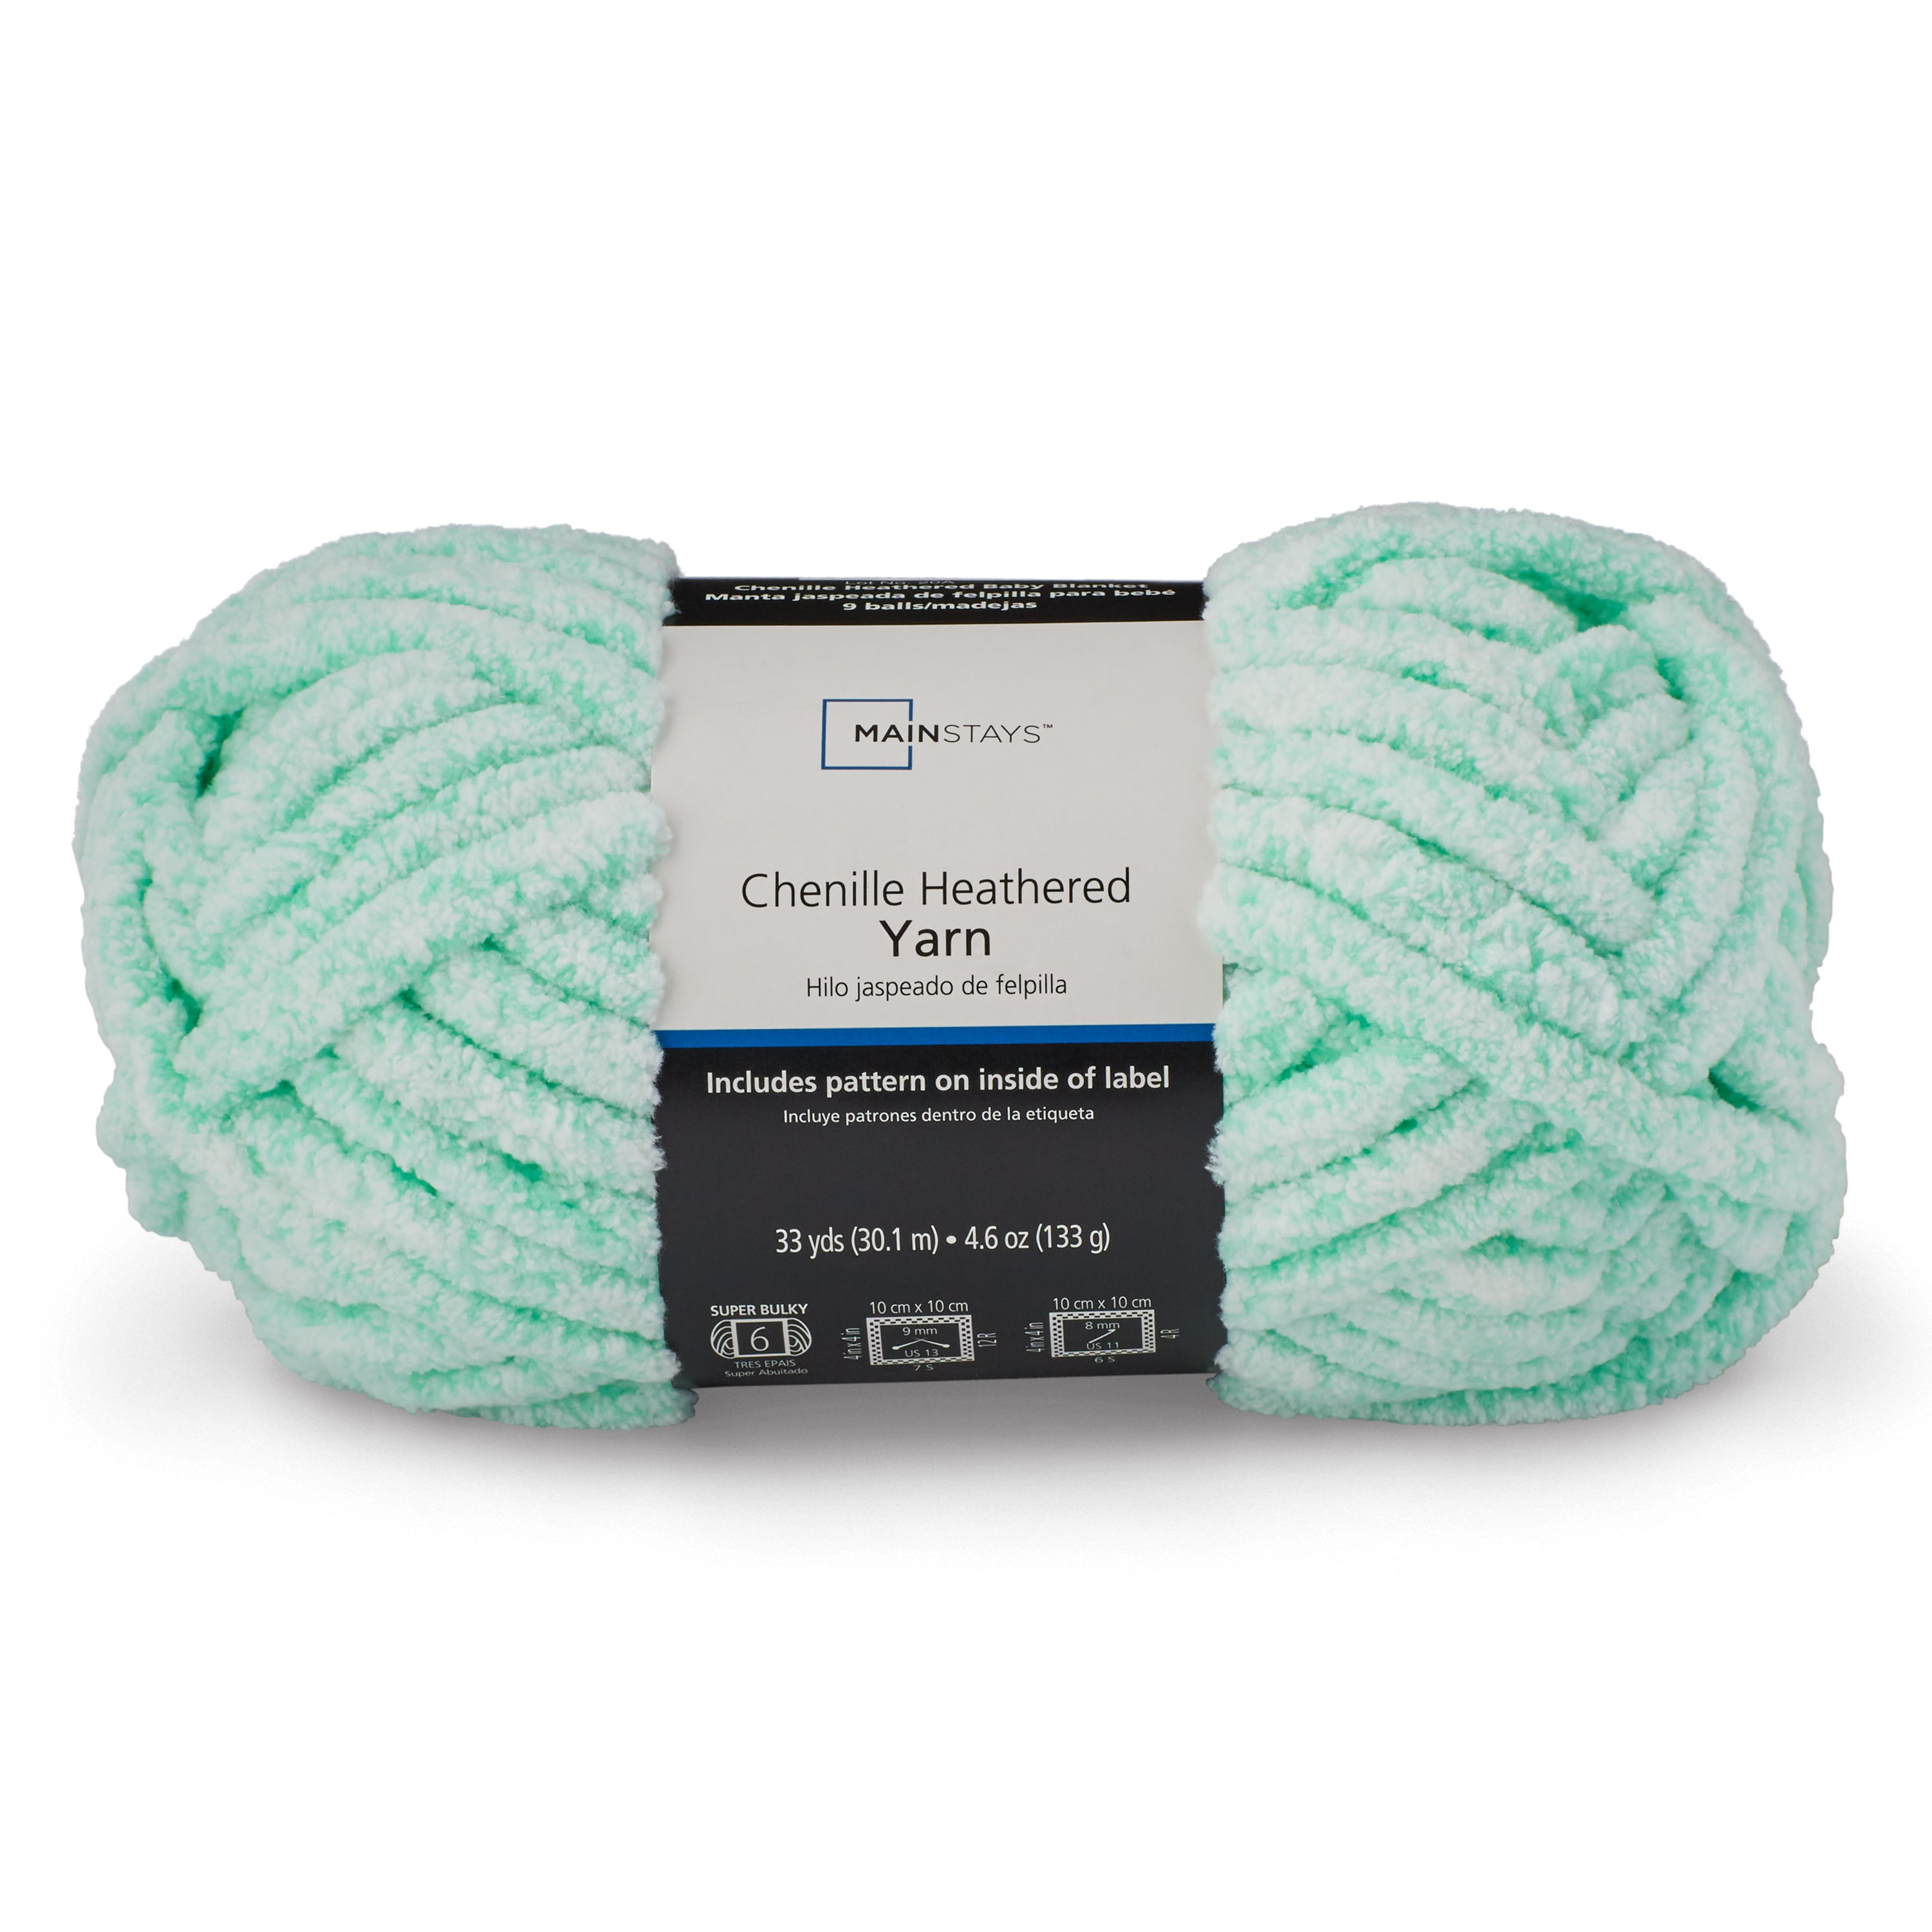 Grass Green Super Chunky Yarn, Green Chunky Yarn, 100% Acrylic, Suitable  for Vegans, 100g Balls of Yarn, Chunky Knitting, Washable Yarn 